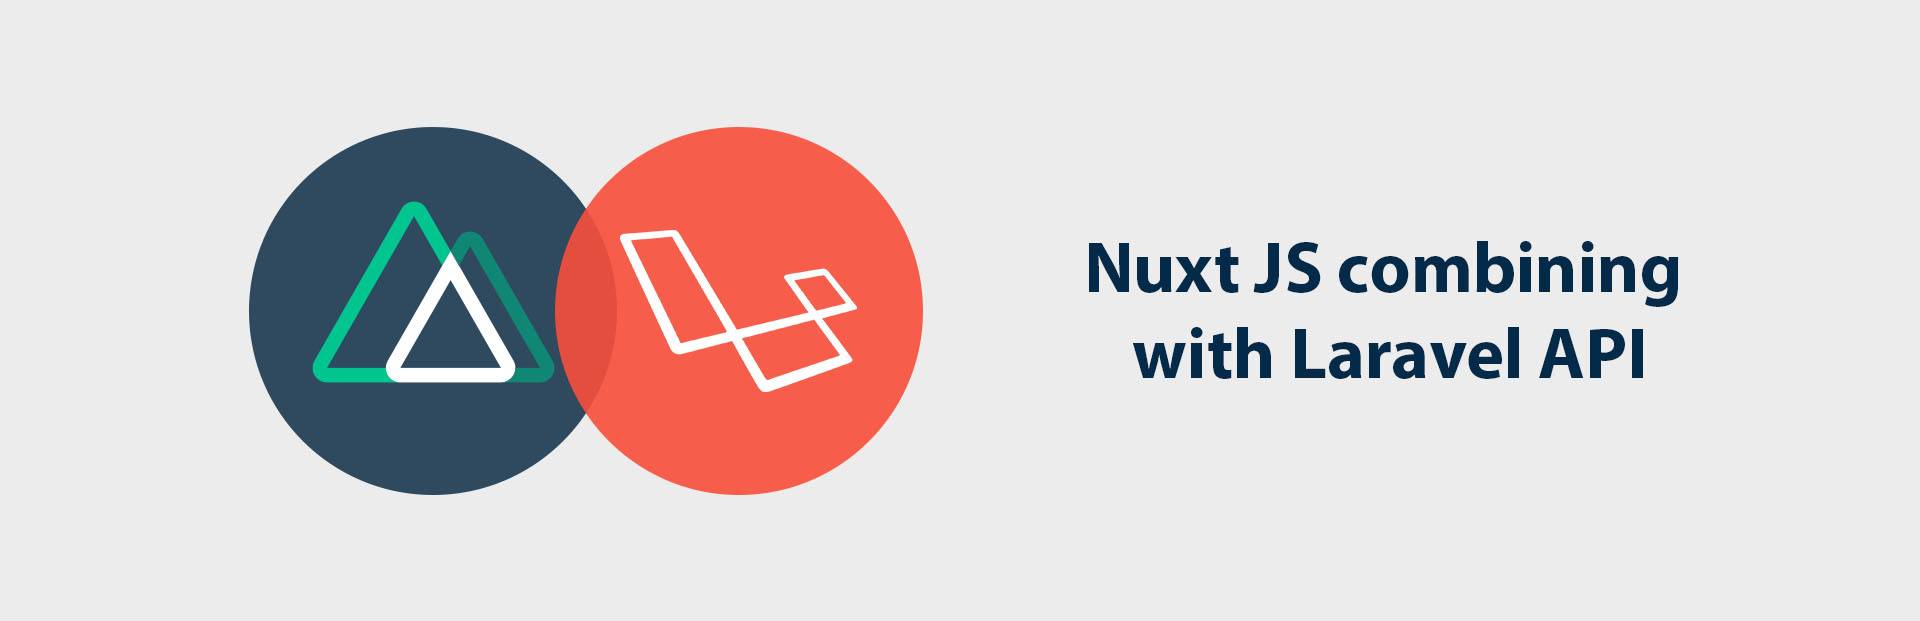 Nuxt.js with Laravel API – Use This Winning Combination